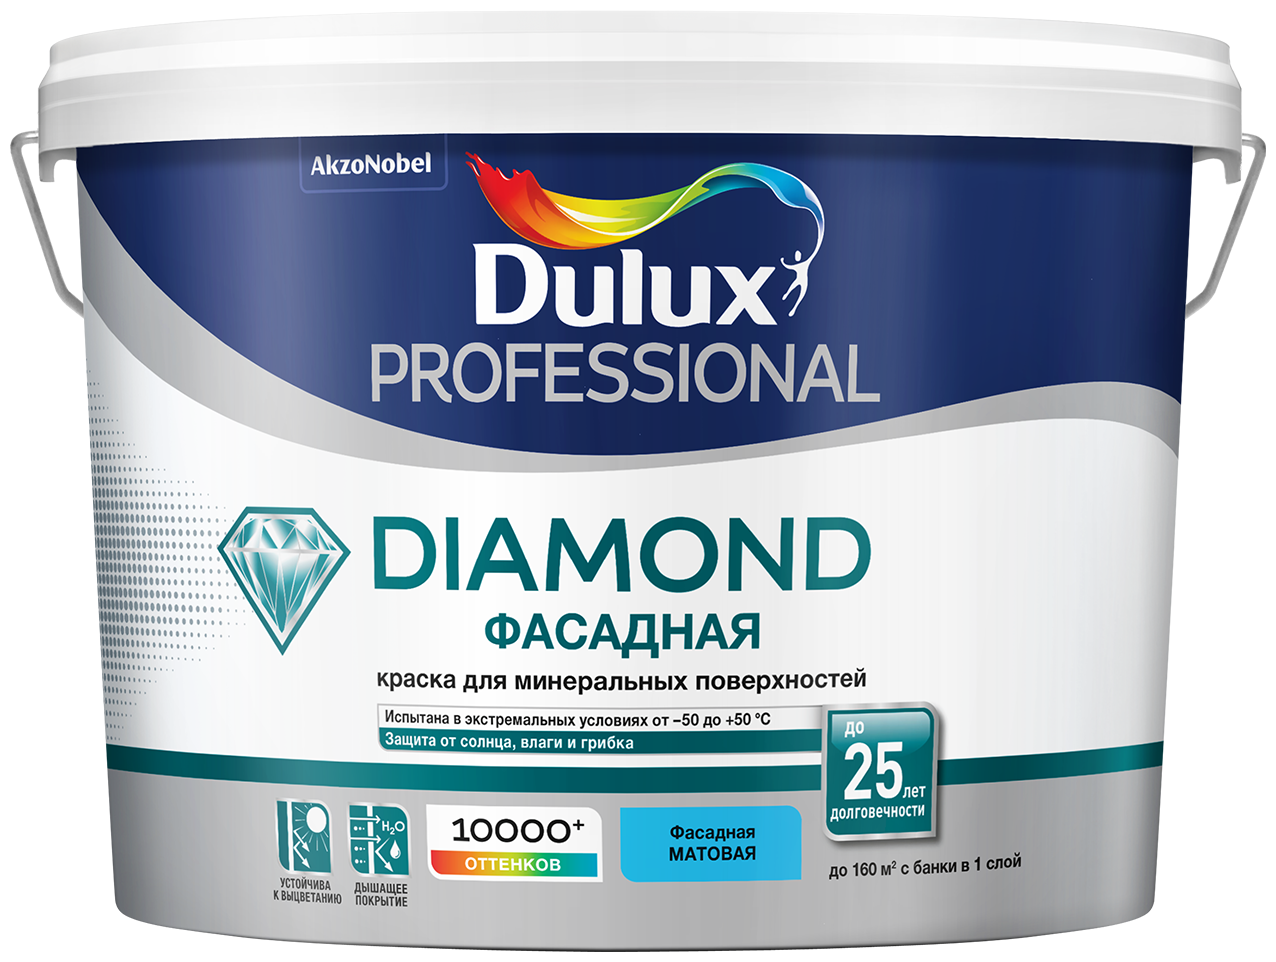 Краска фасадная водно-дисперсионная Dulux Trade Diamond гладкая база BW 10 л.